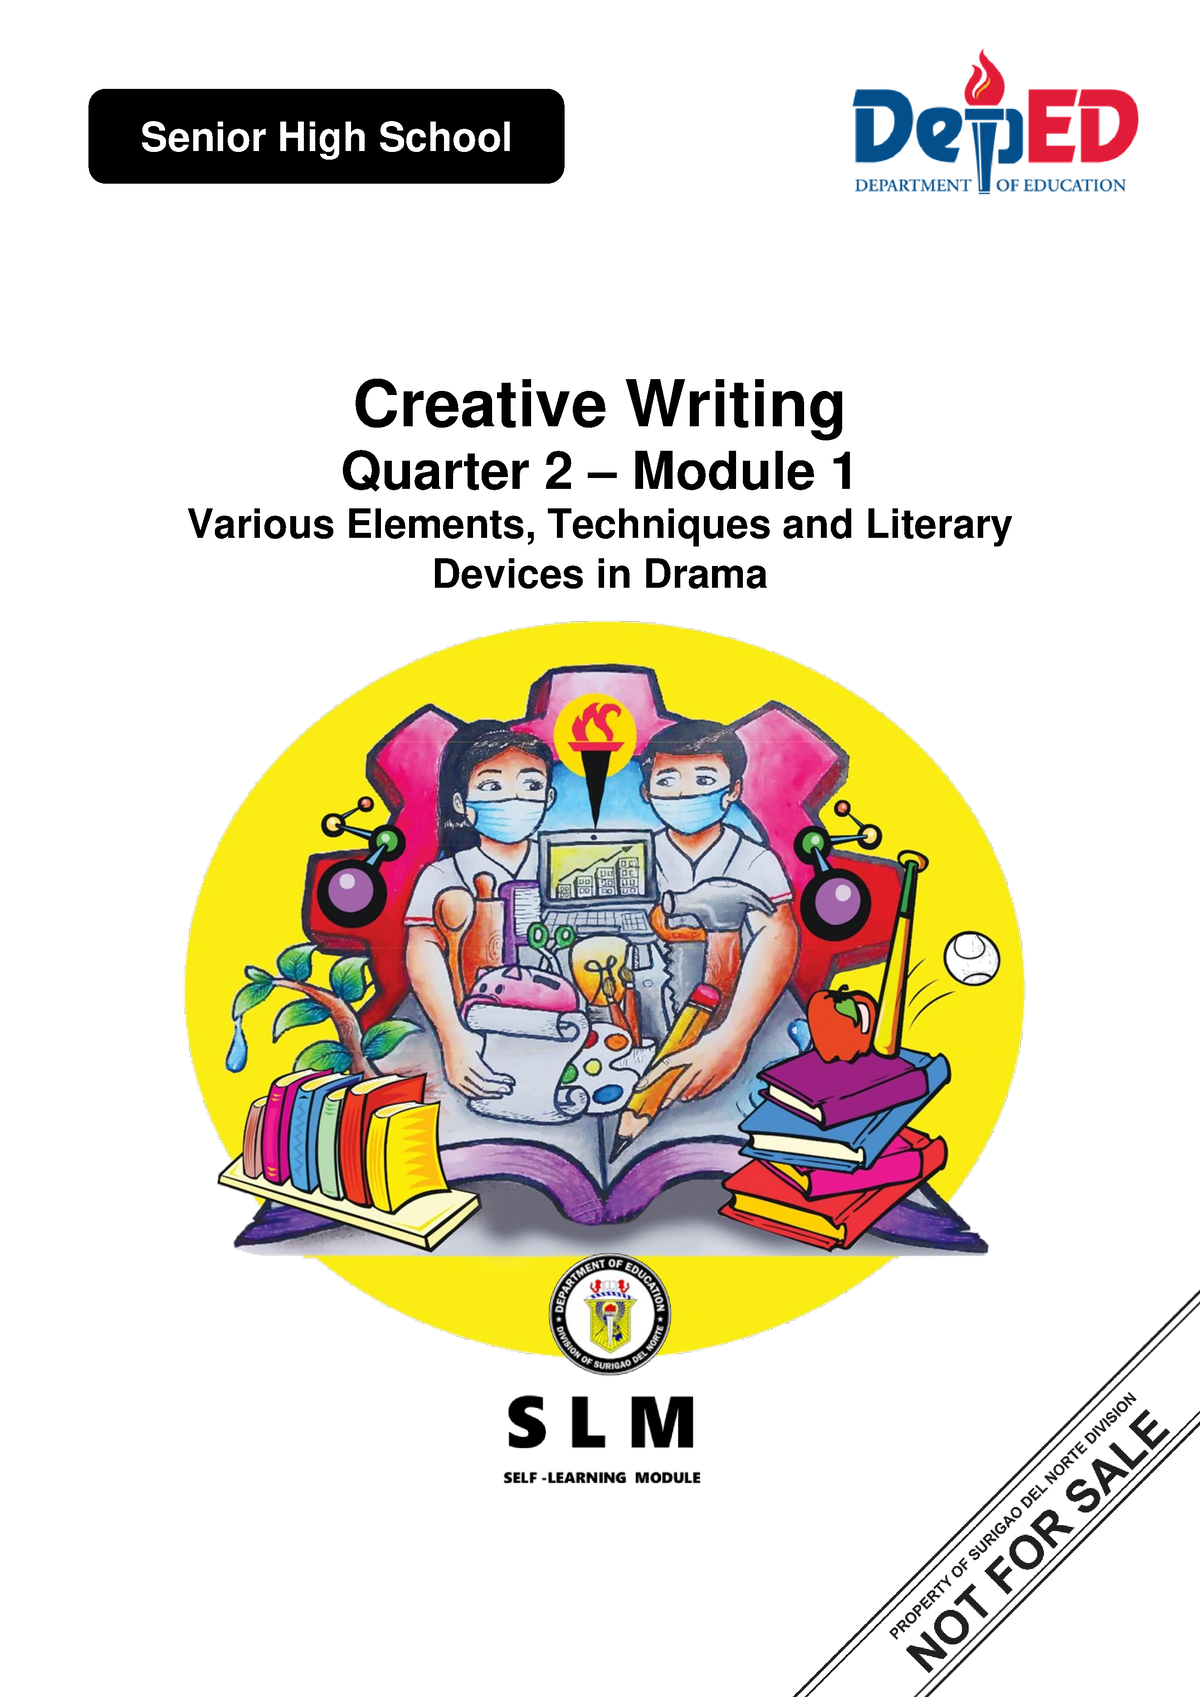 dll in creative writing quarter 2